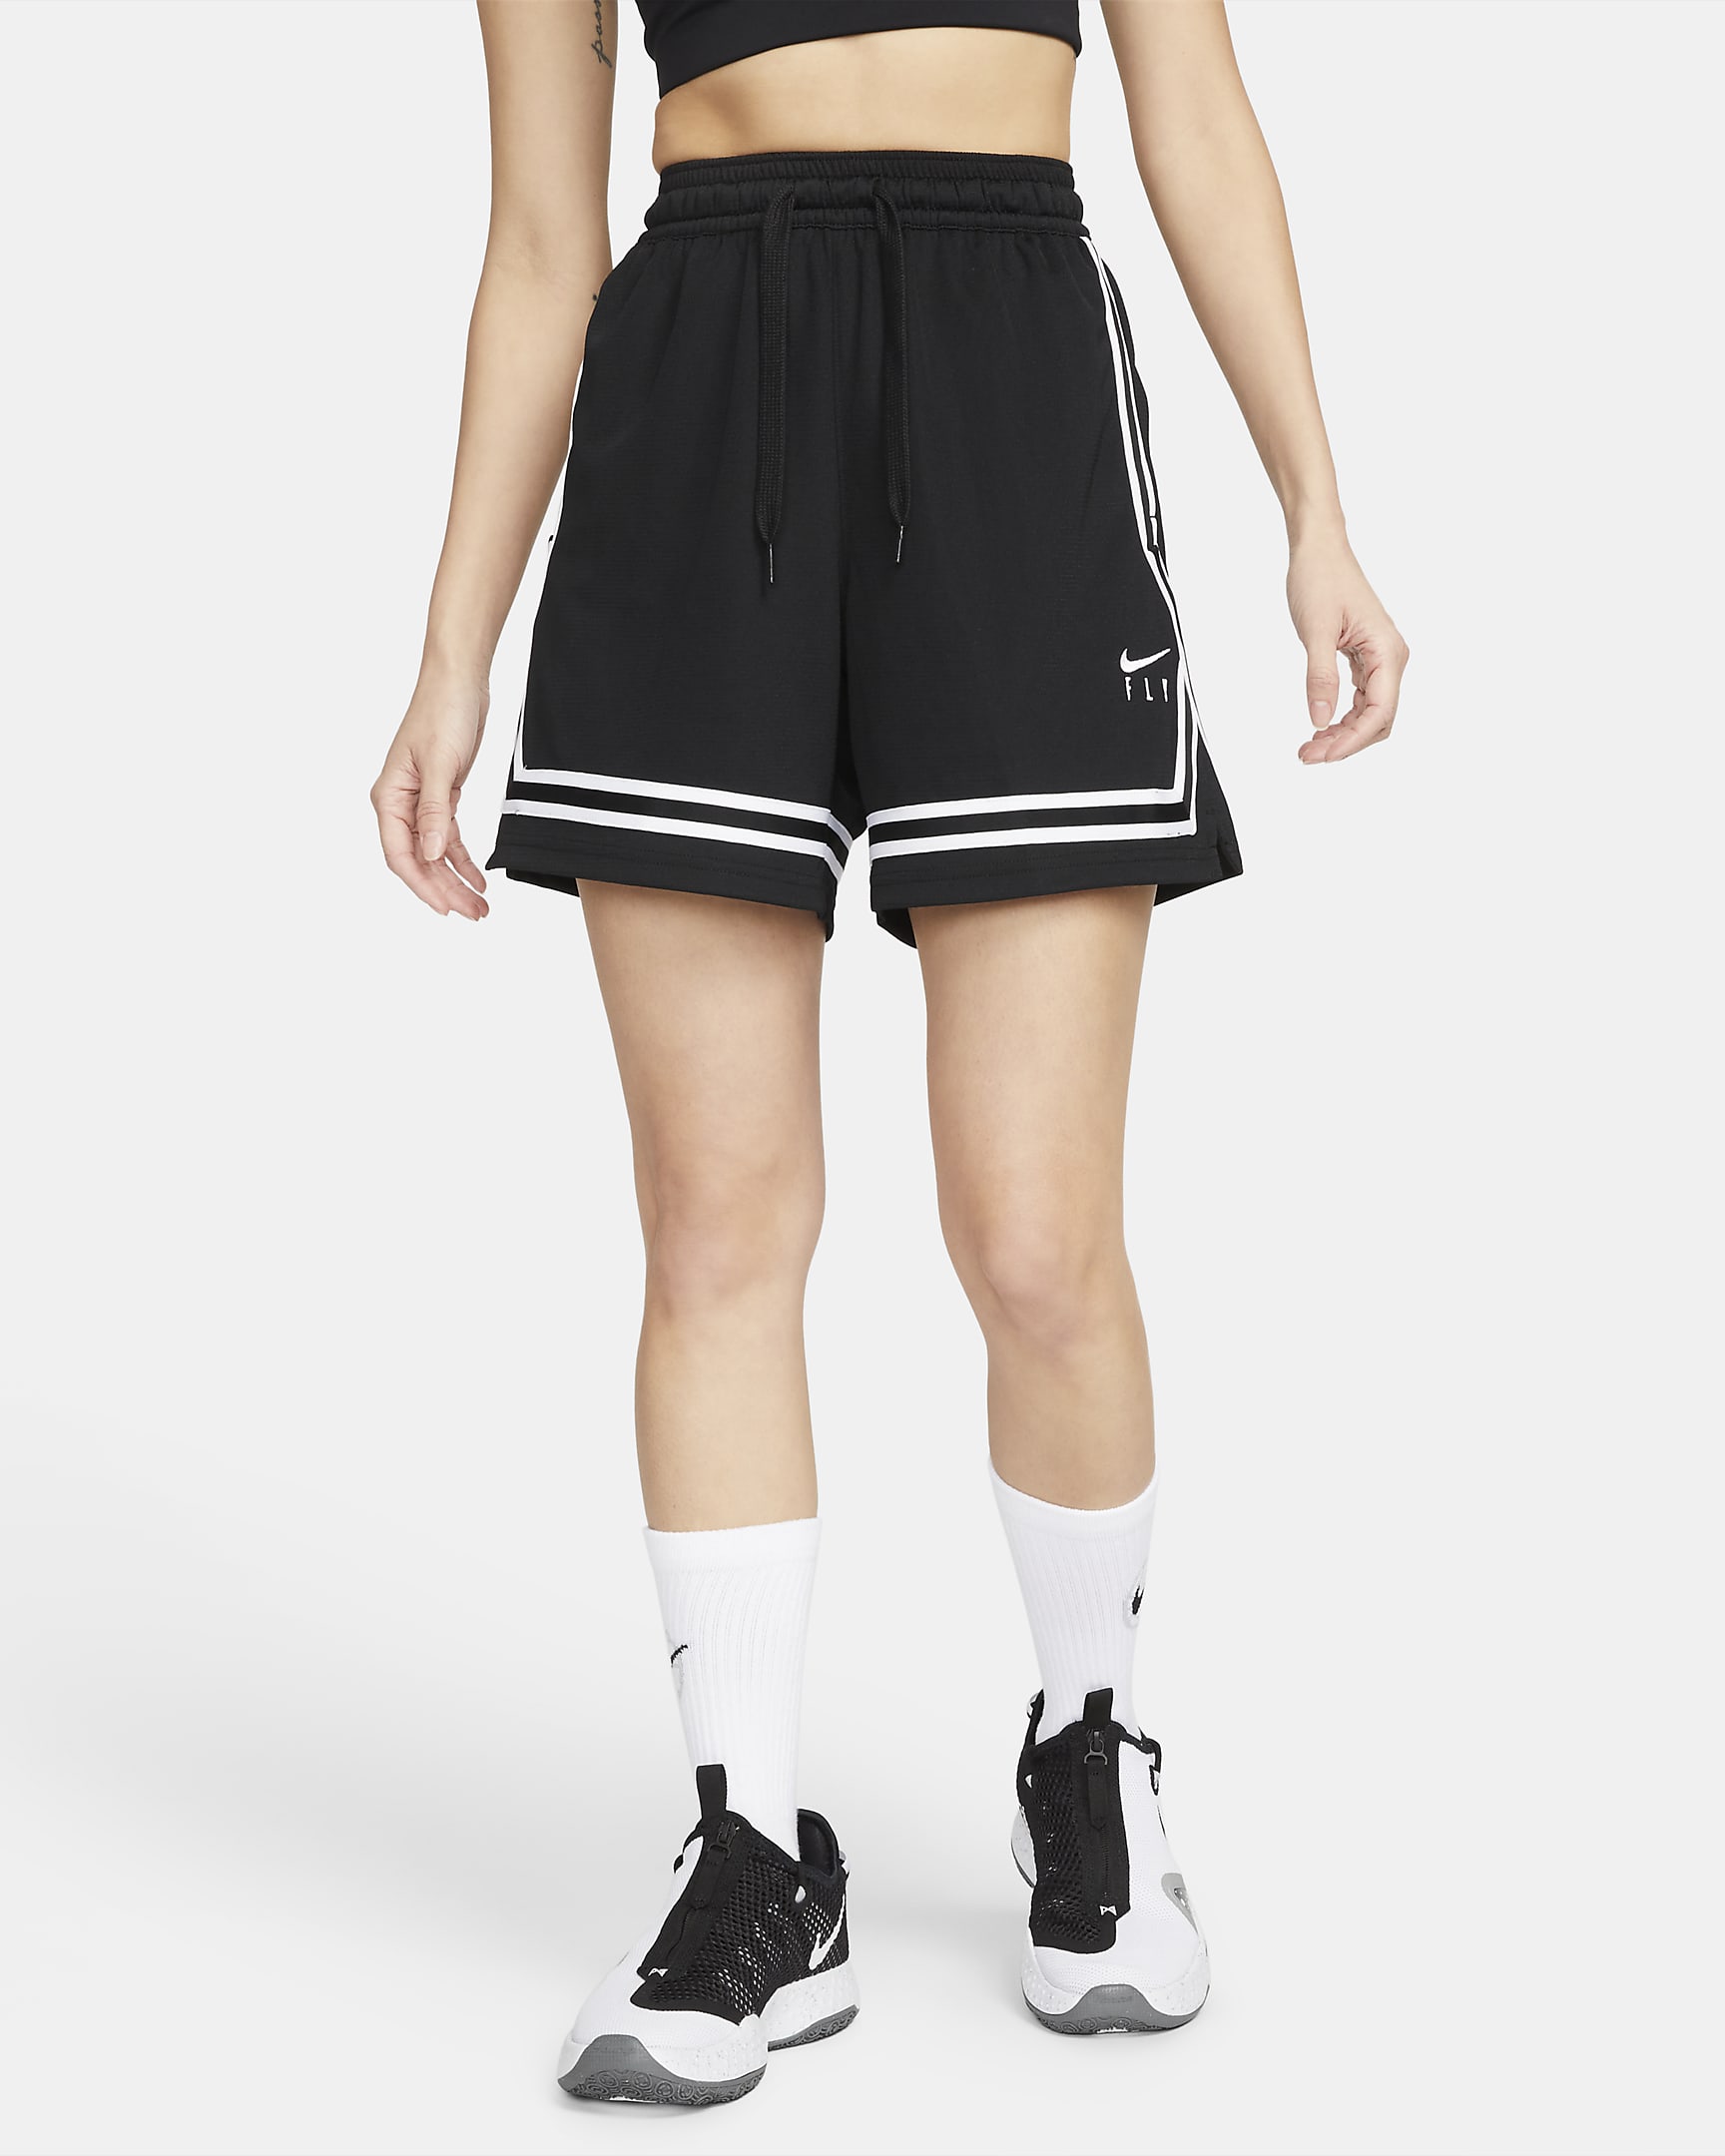 Nike Fly Crossover Women's Basketball Shorts. Nike VN